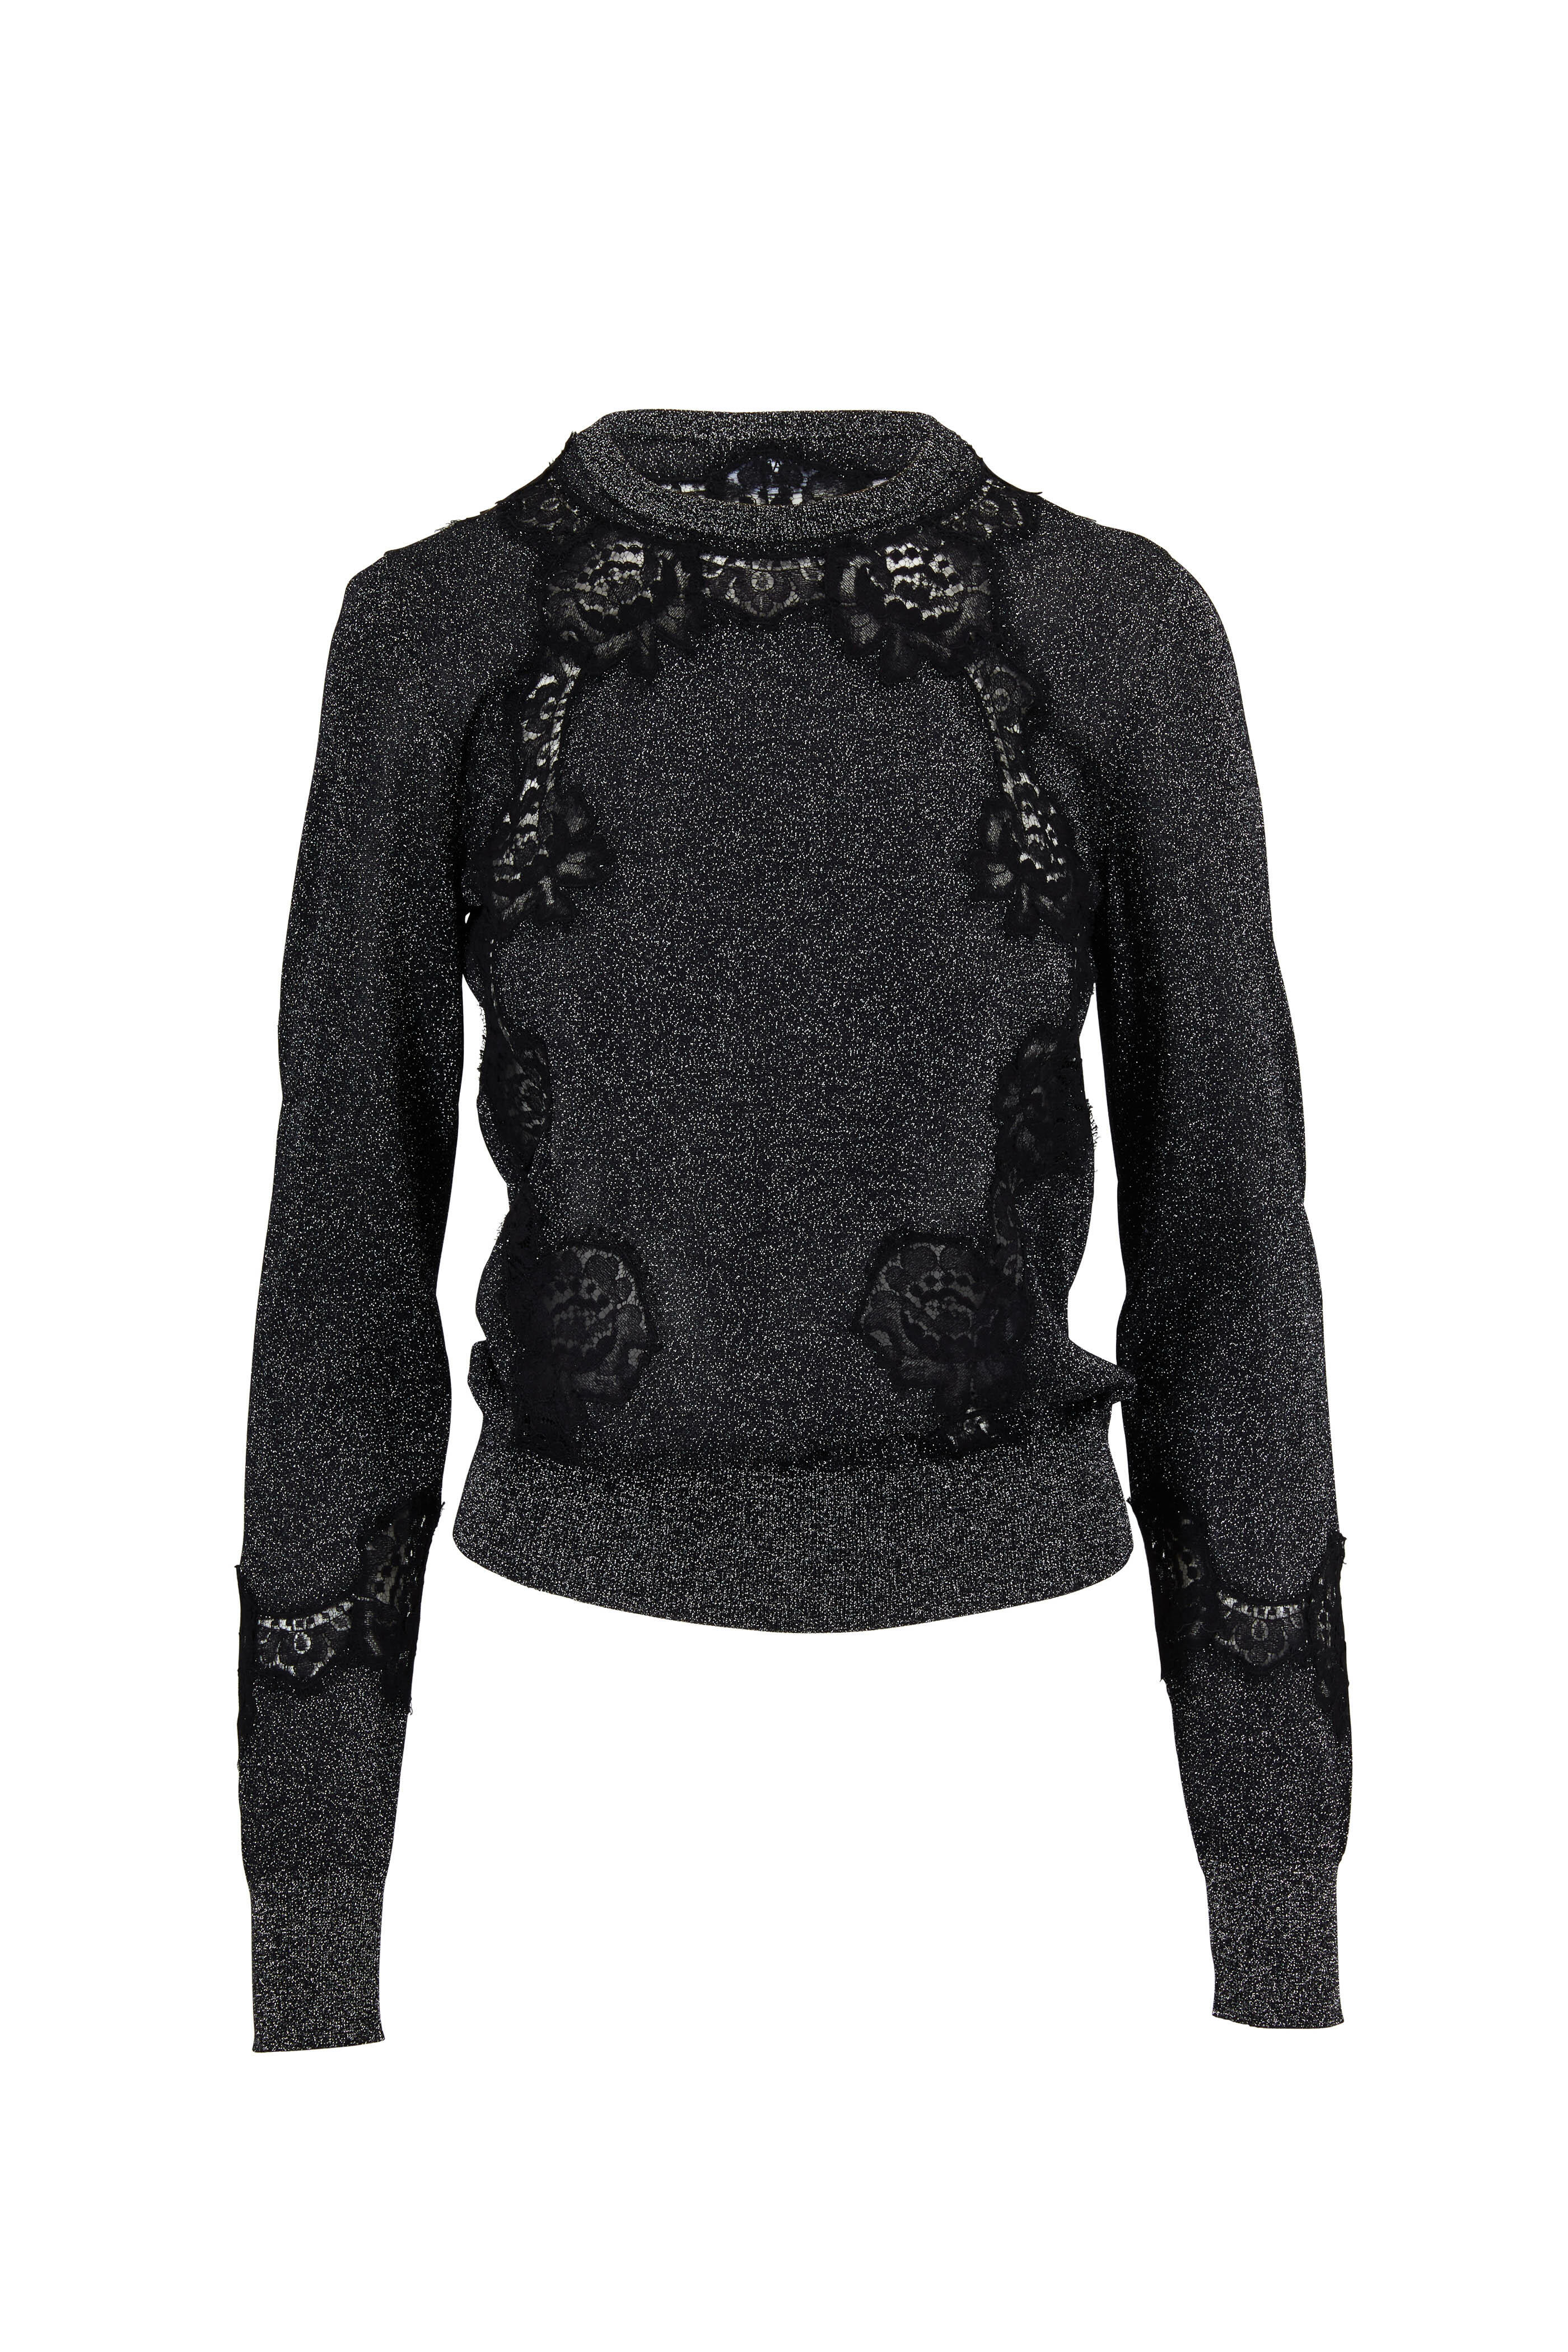 Dolce & Gabbana - Dark Gray Lace Trim Lurex Knit Sweater